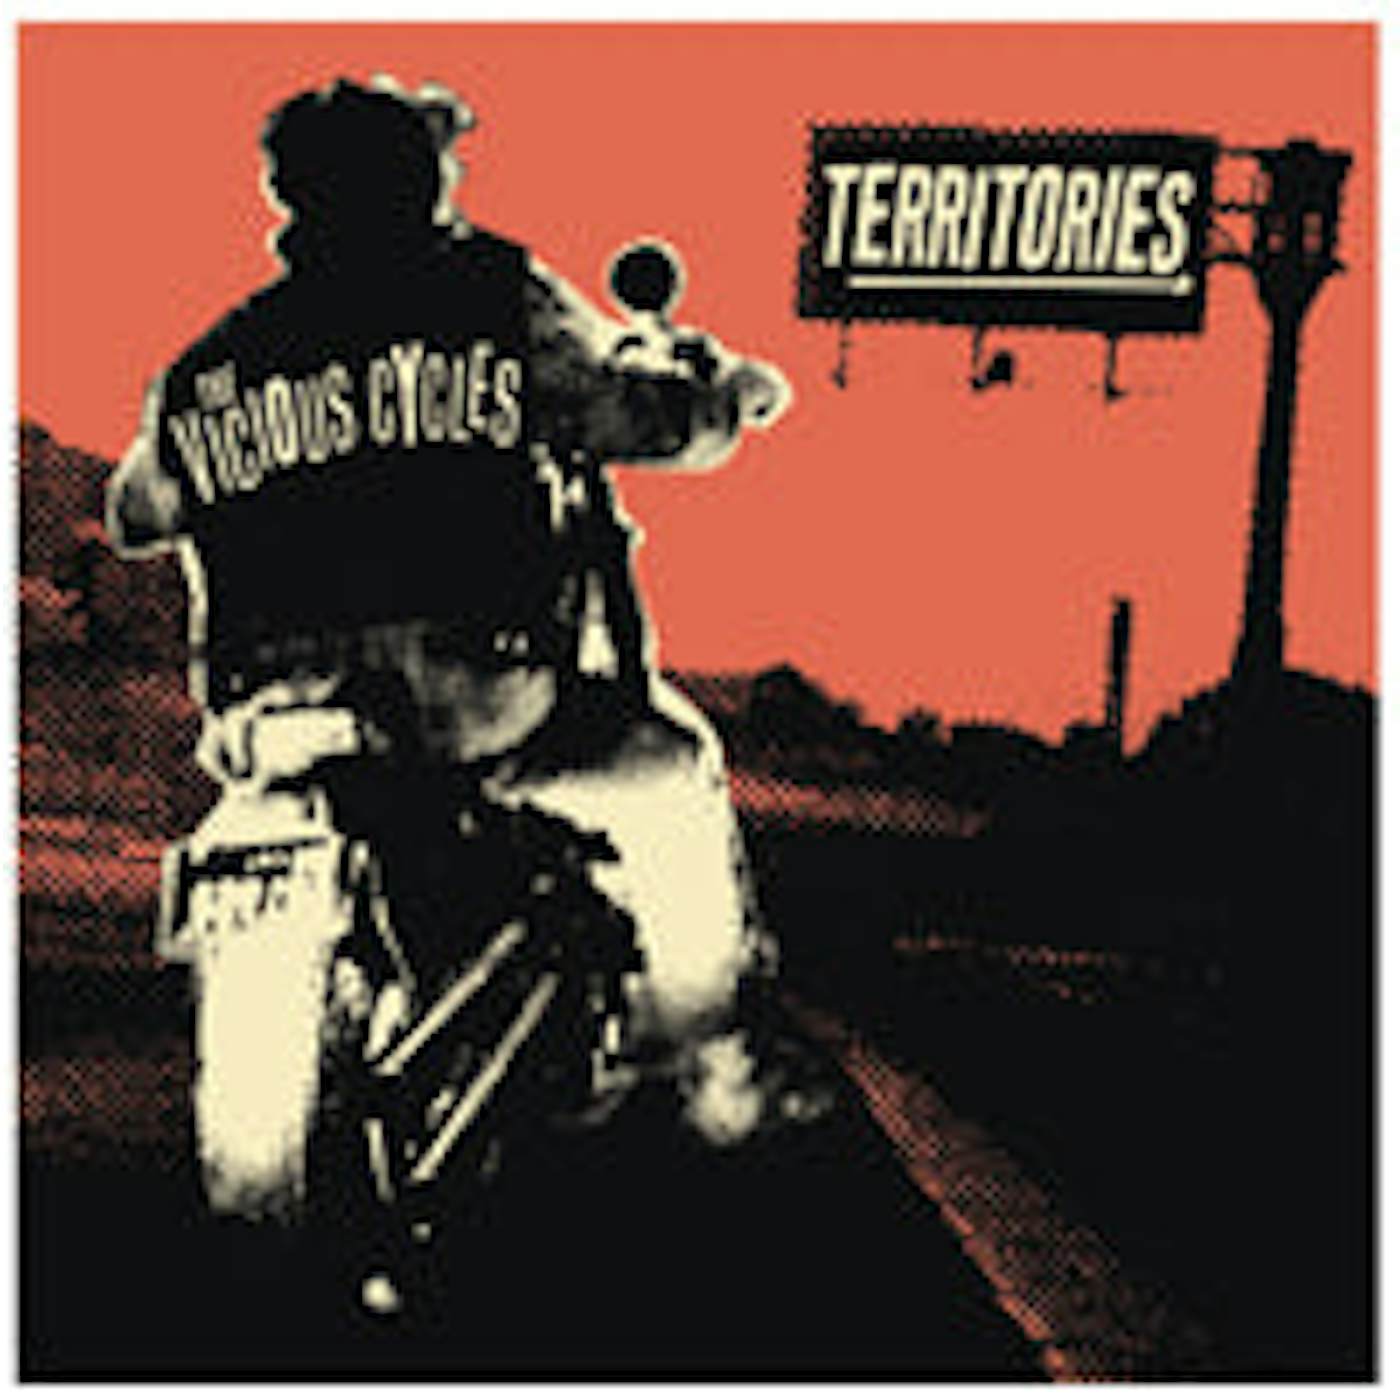 Territories / Vicious Cycles LP - Territories / Vicious Cycles (Vinyl)